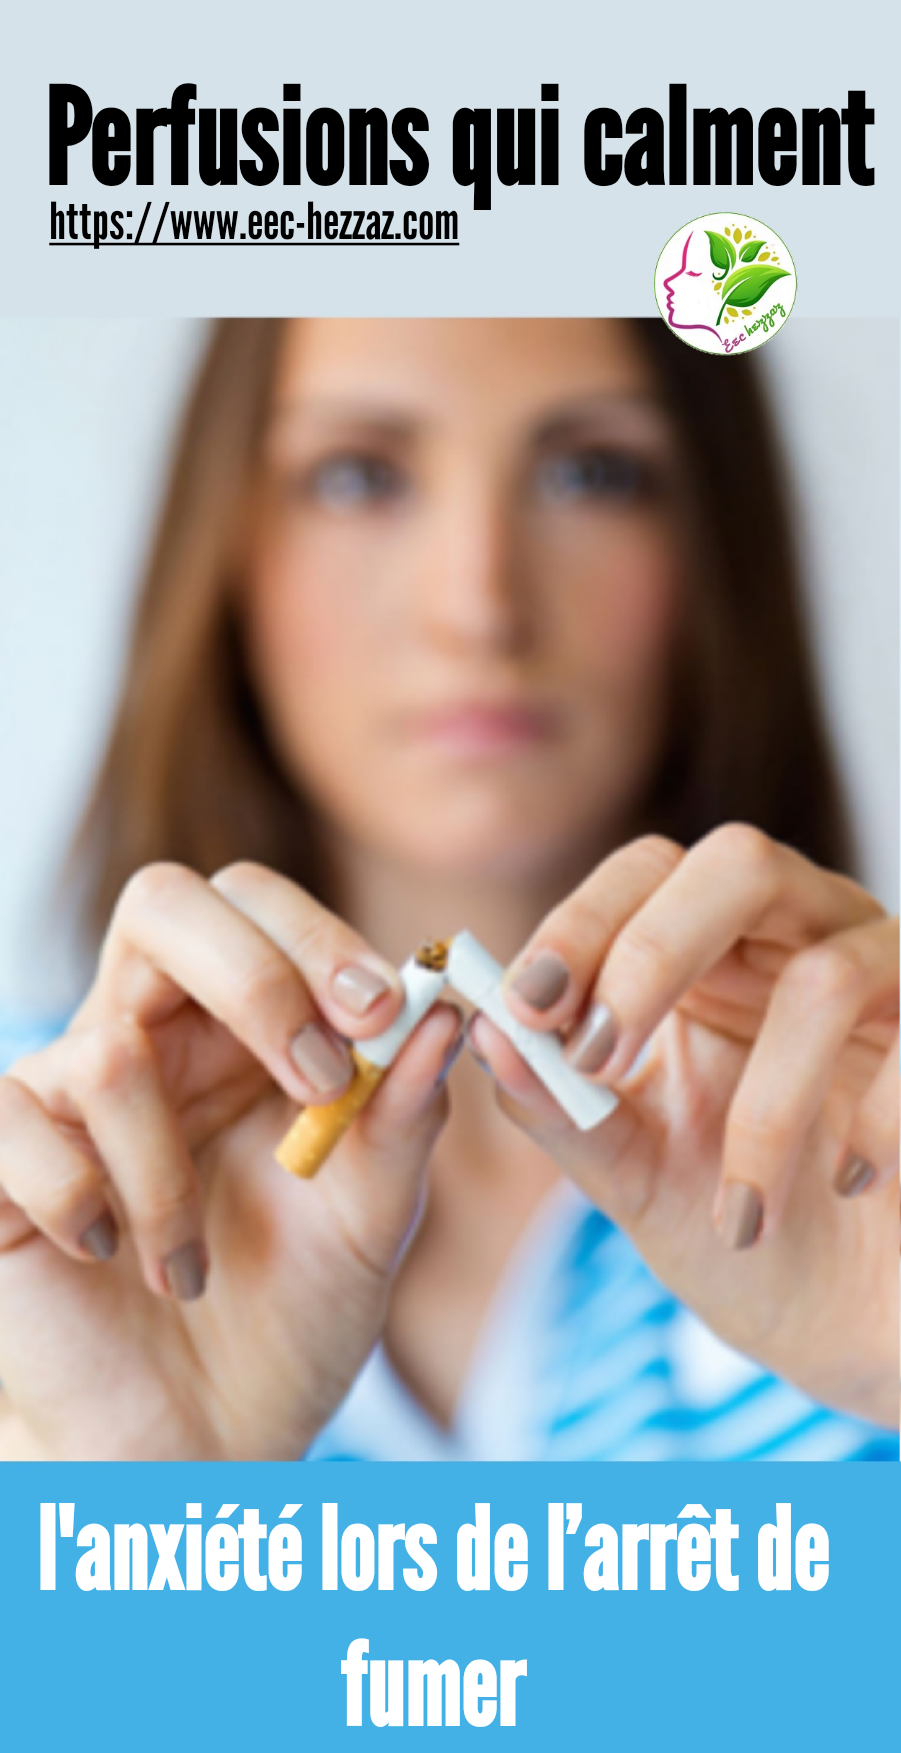 Perfusions qui calment l'anxiété lors de l’arrêt de fumer